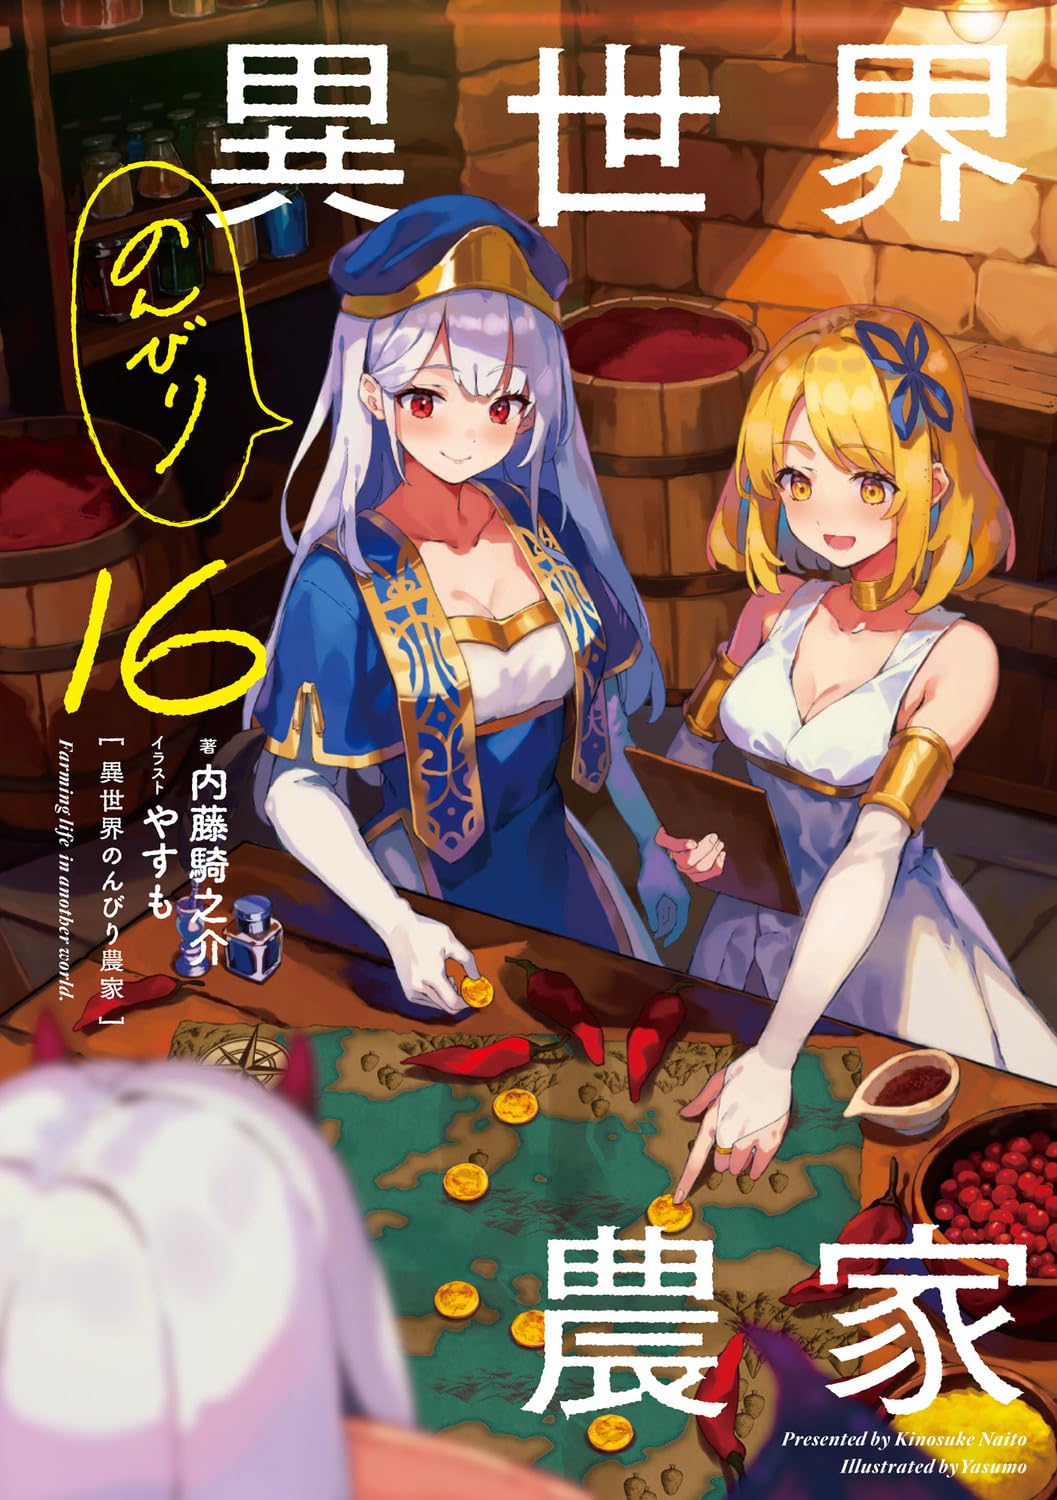 Novo volume de Youkoso Jitsuryoku – Light Novels mais Vendidas